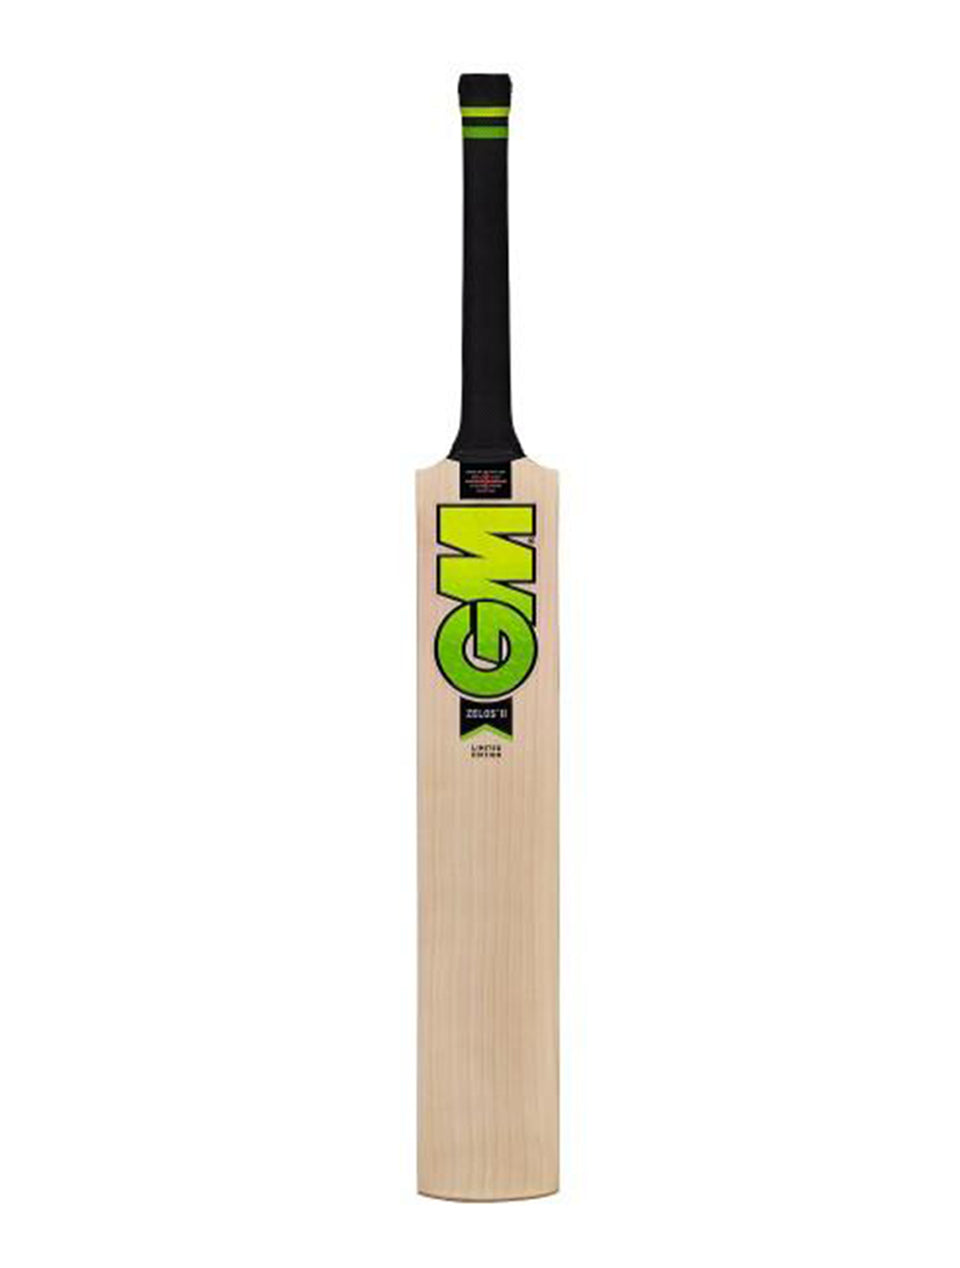 Prosportsae - GM Zelos II DXM 606 TTNOW Cricket Bat